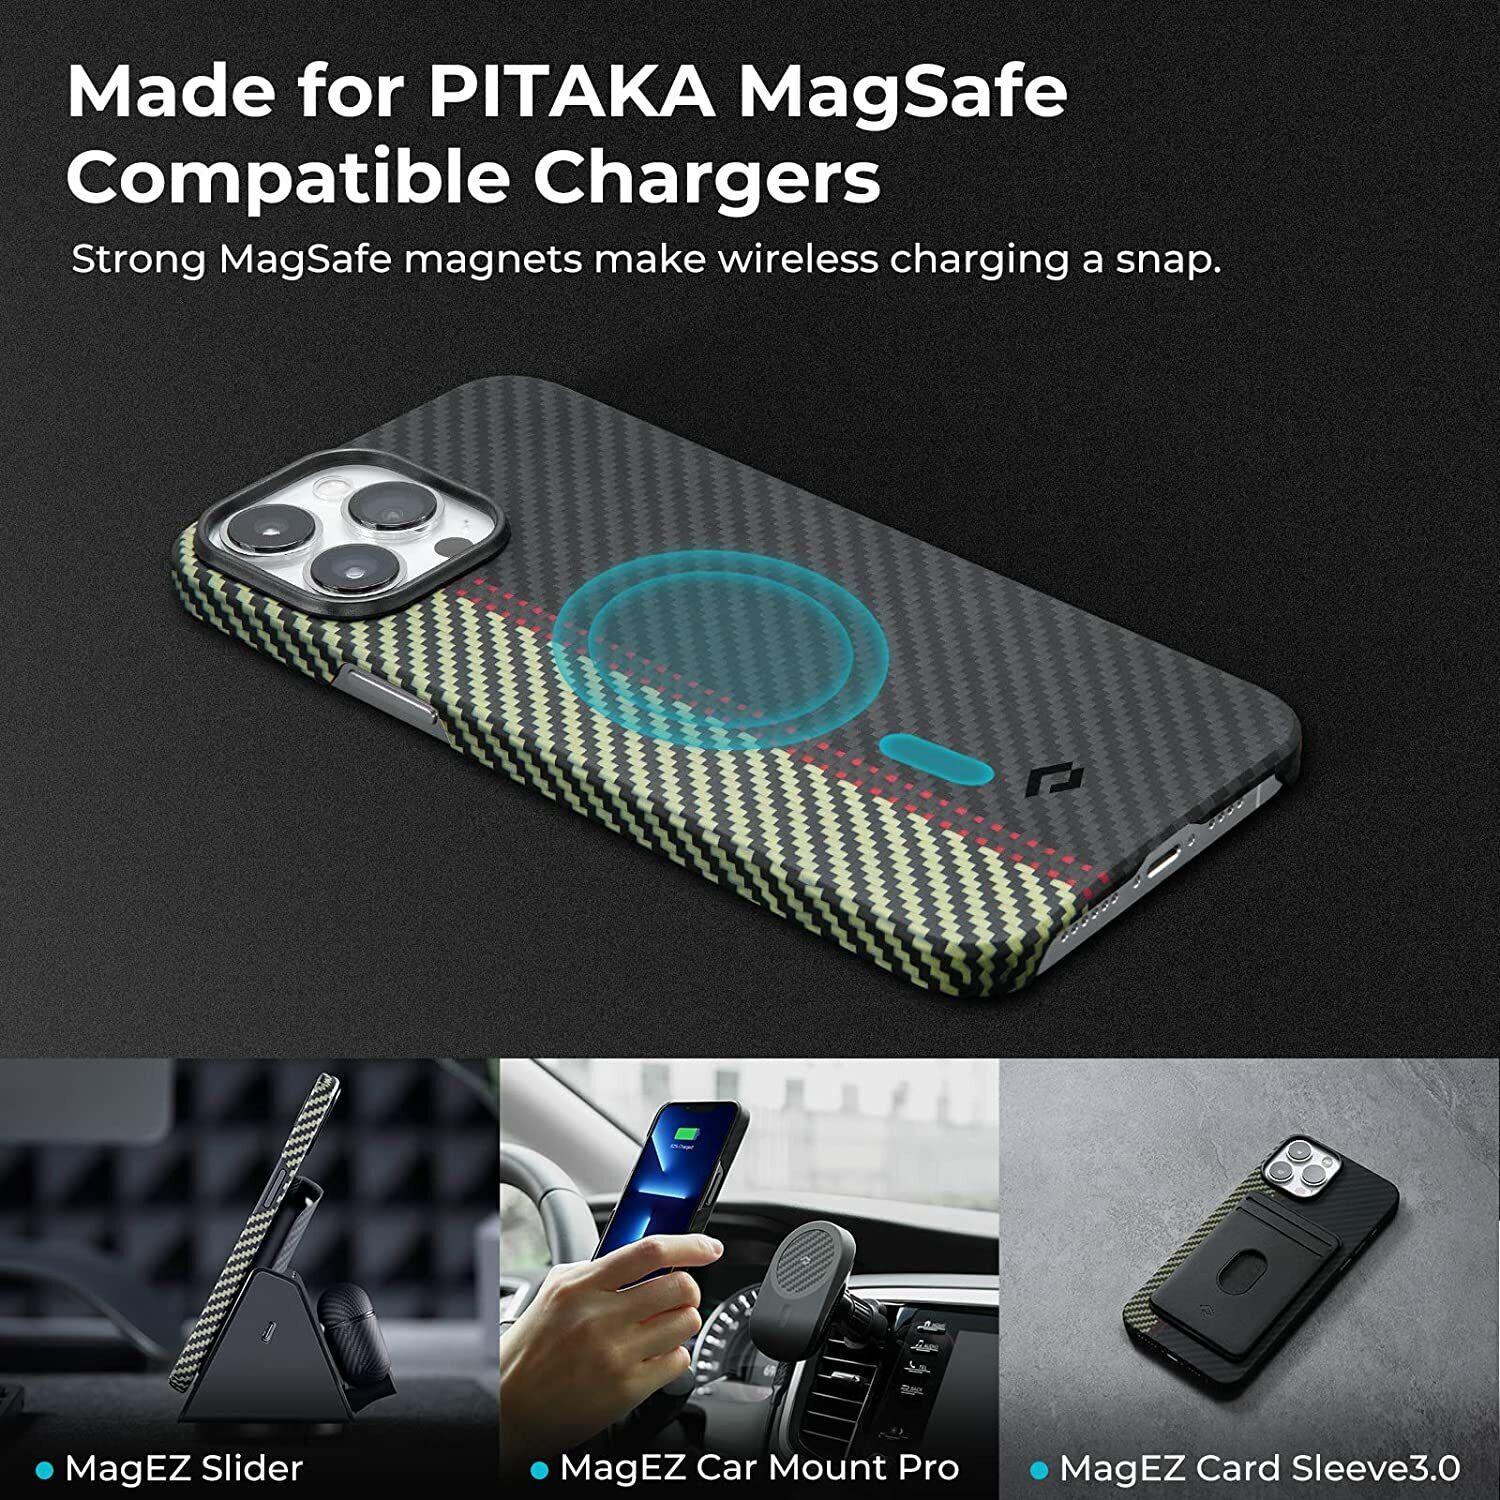 PITAKA Aramid Fiber Fusion Weaving MagEZ 2 Case for iPhone 13 Pro 6.1" Default PITAKA 